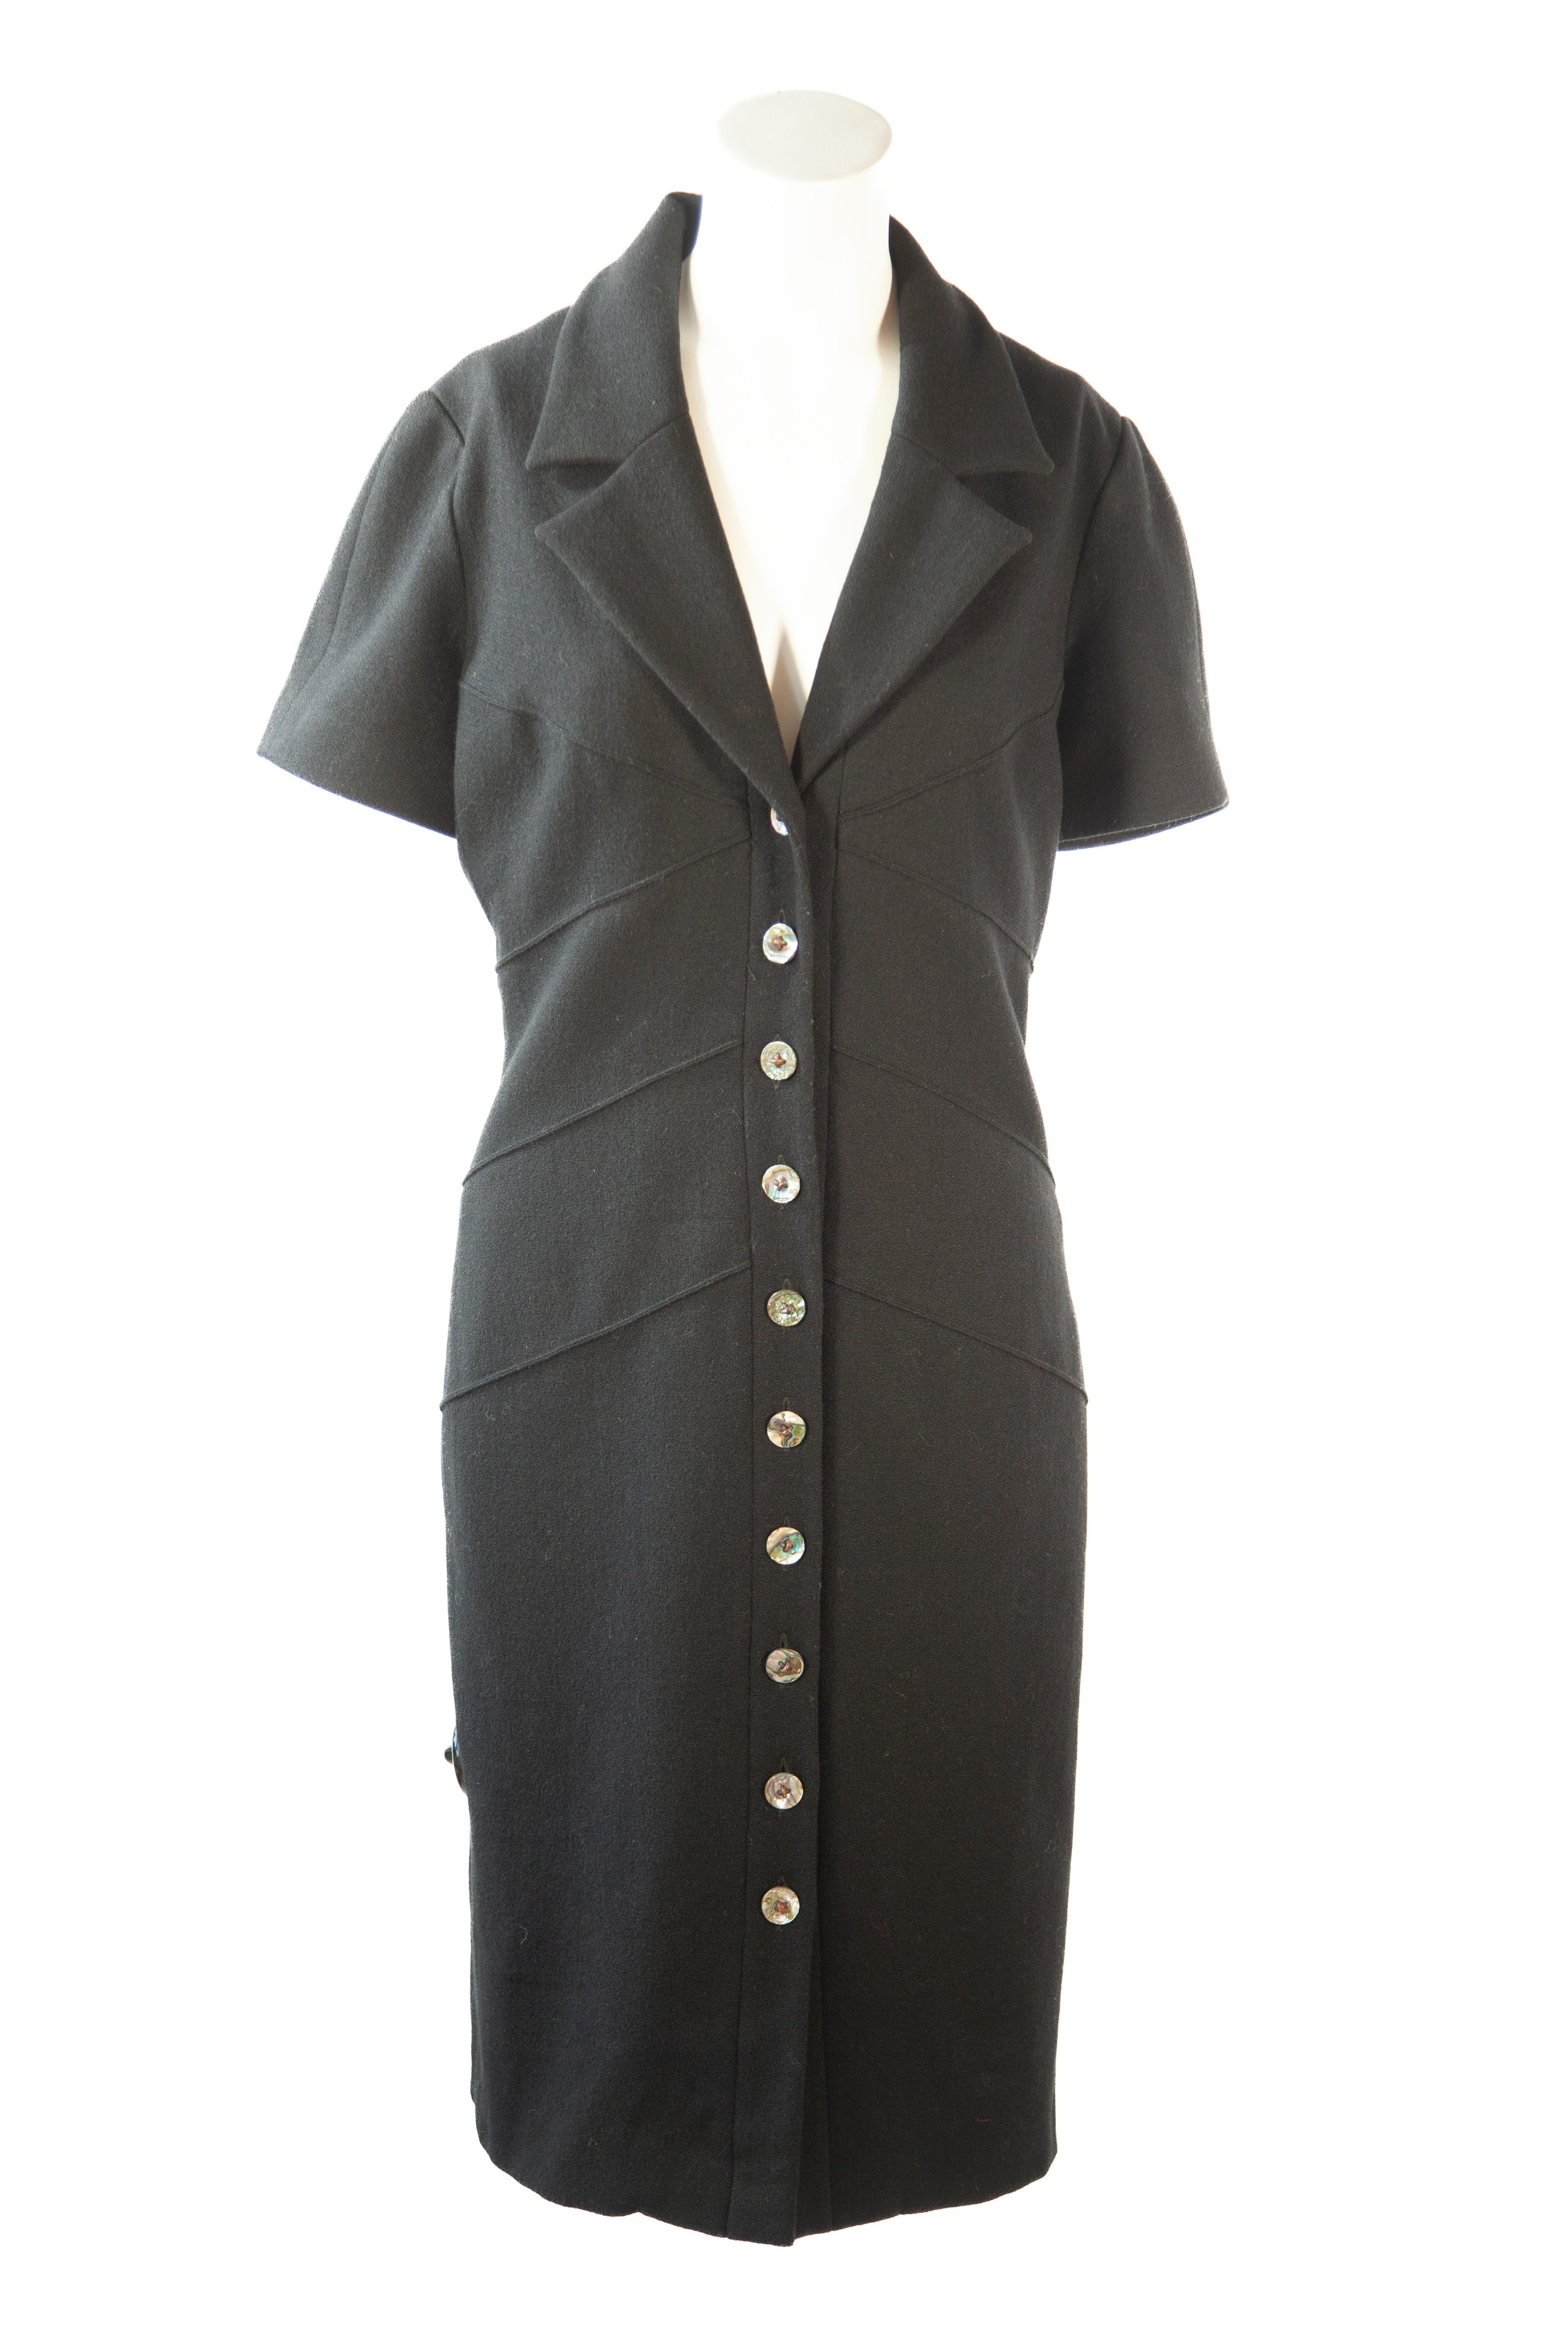 Fendi Black Collared Midi Dress  In Excellent Condition For Sale In Kingston, NY